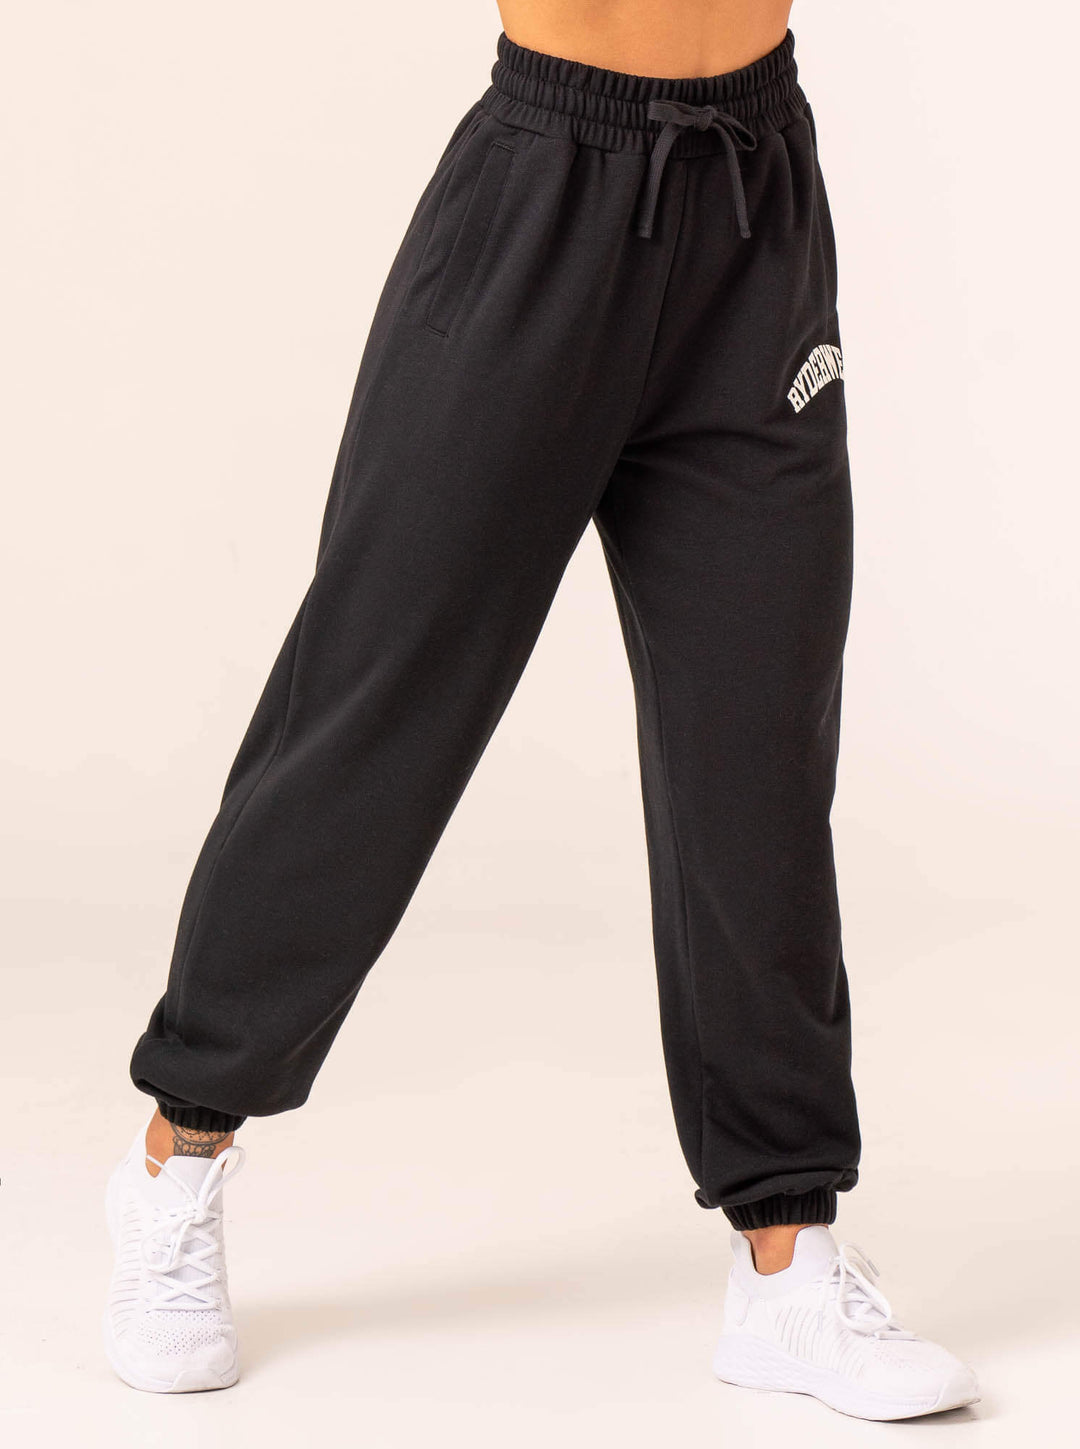 Women's Collegiate Track Pant - Black Clothing Ryderwear 